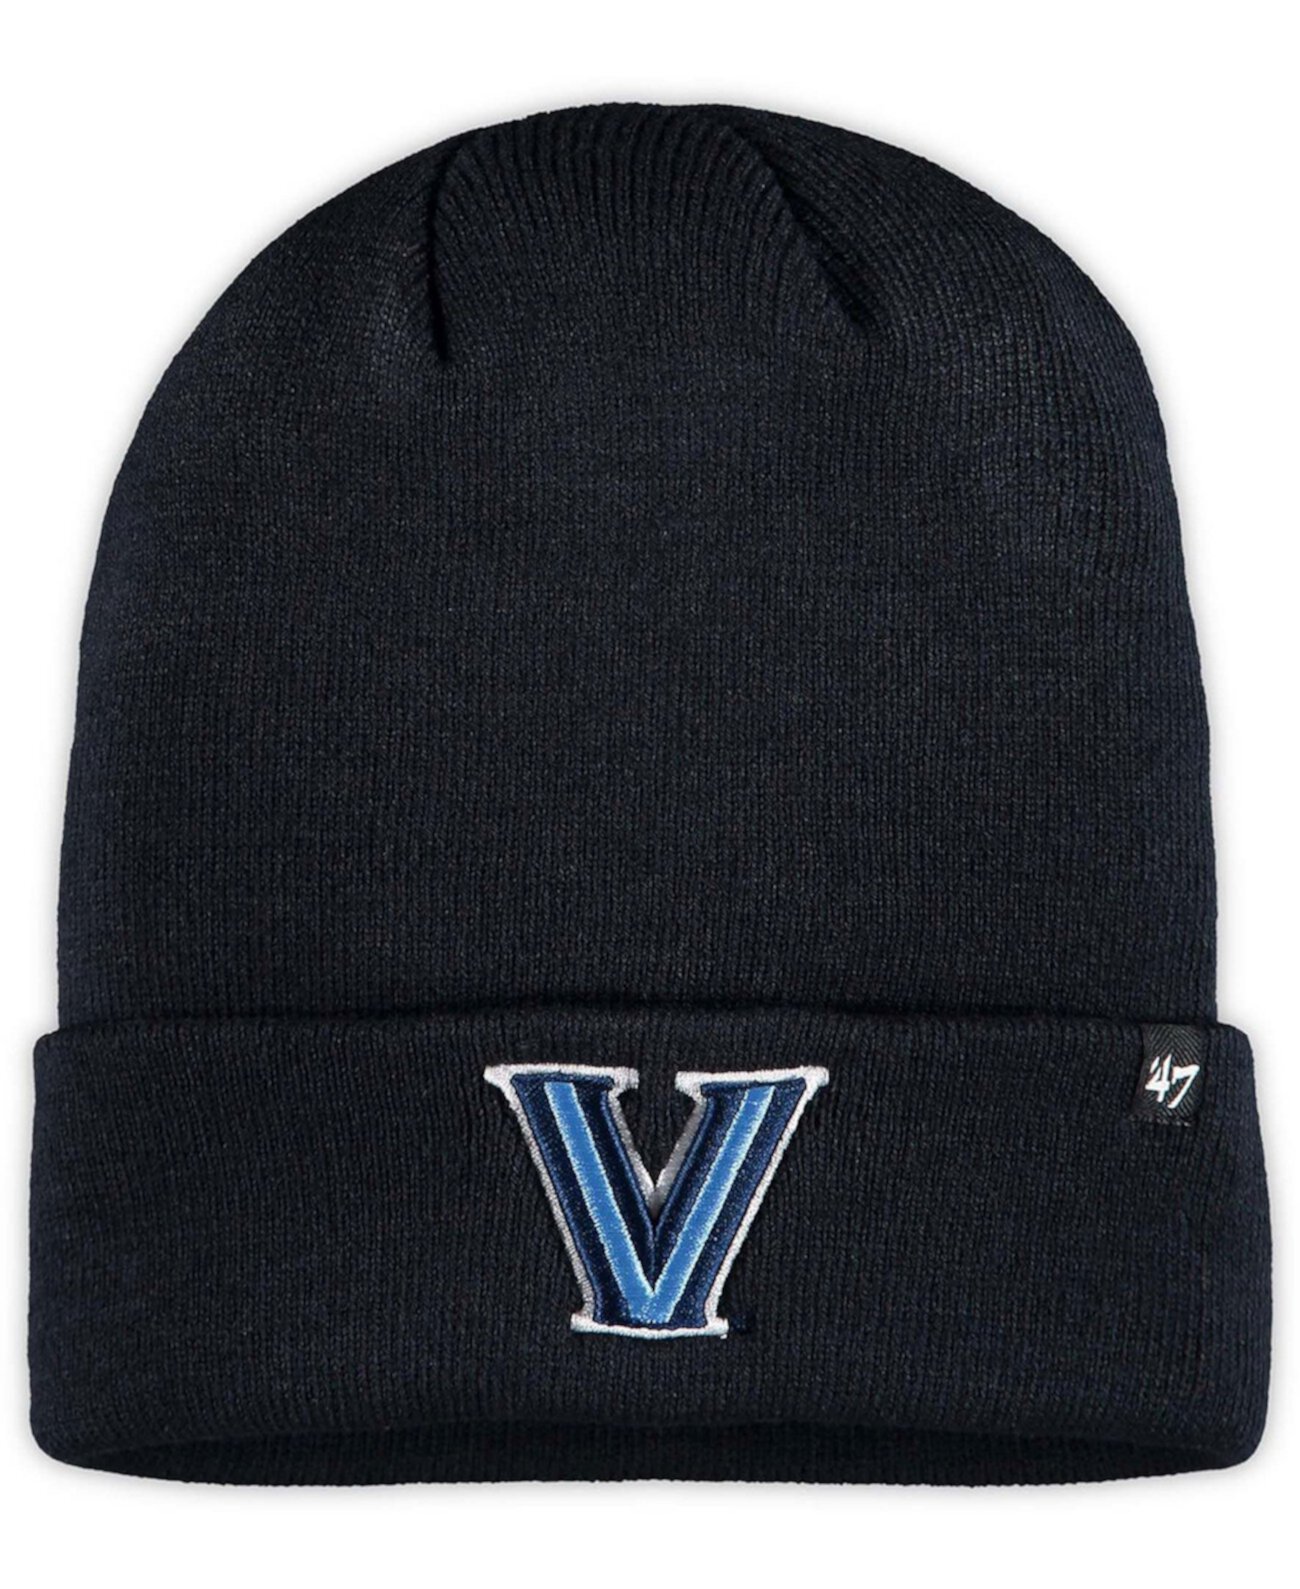 Мужская темно-синяя вязаная шапка Villanova Wildcats с приподнятыми манжетами '47 Brand